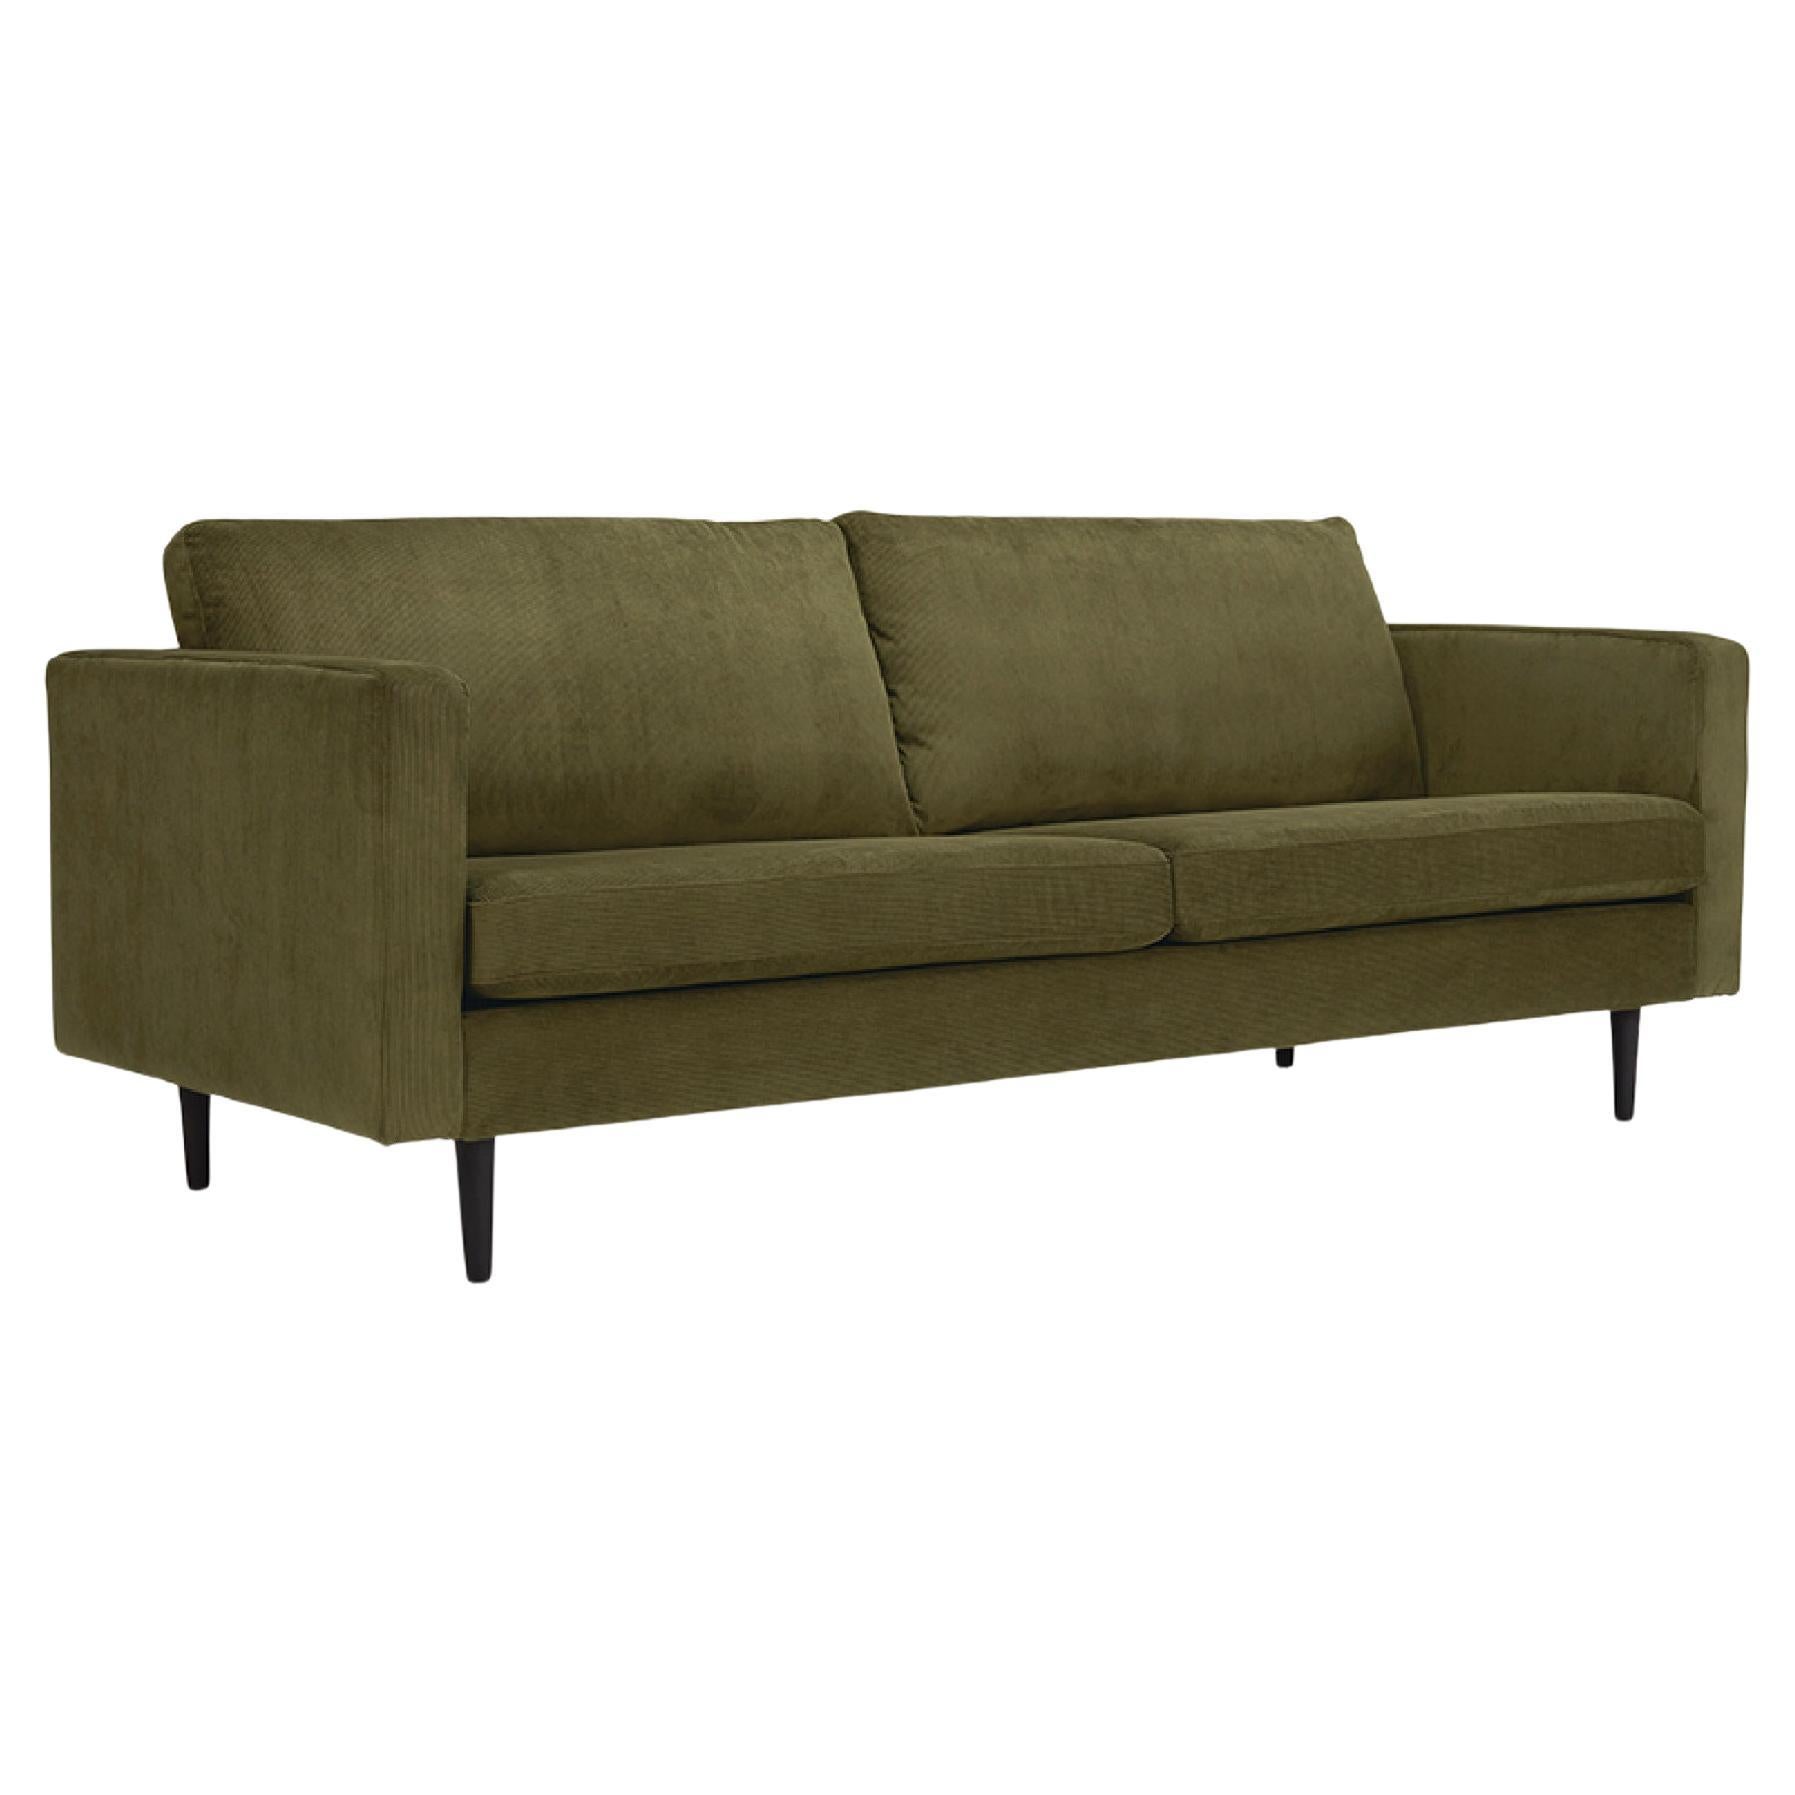 Hayche Clasico 3 Seater Sofa - Green Velvet, UK, Made to Order For Sale